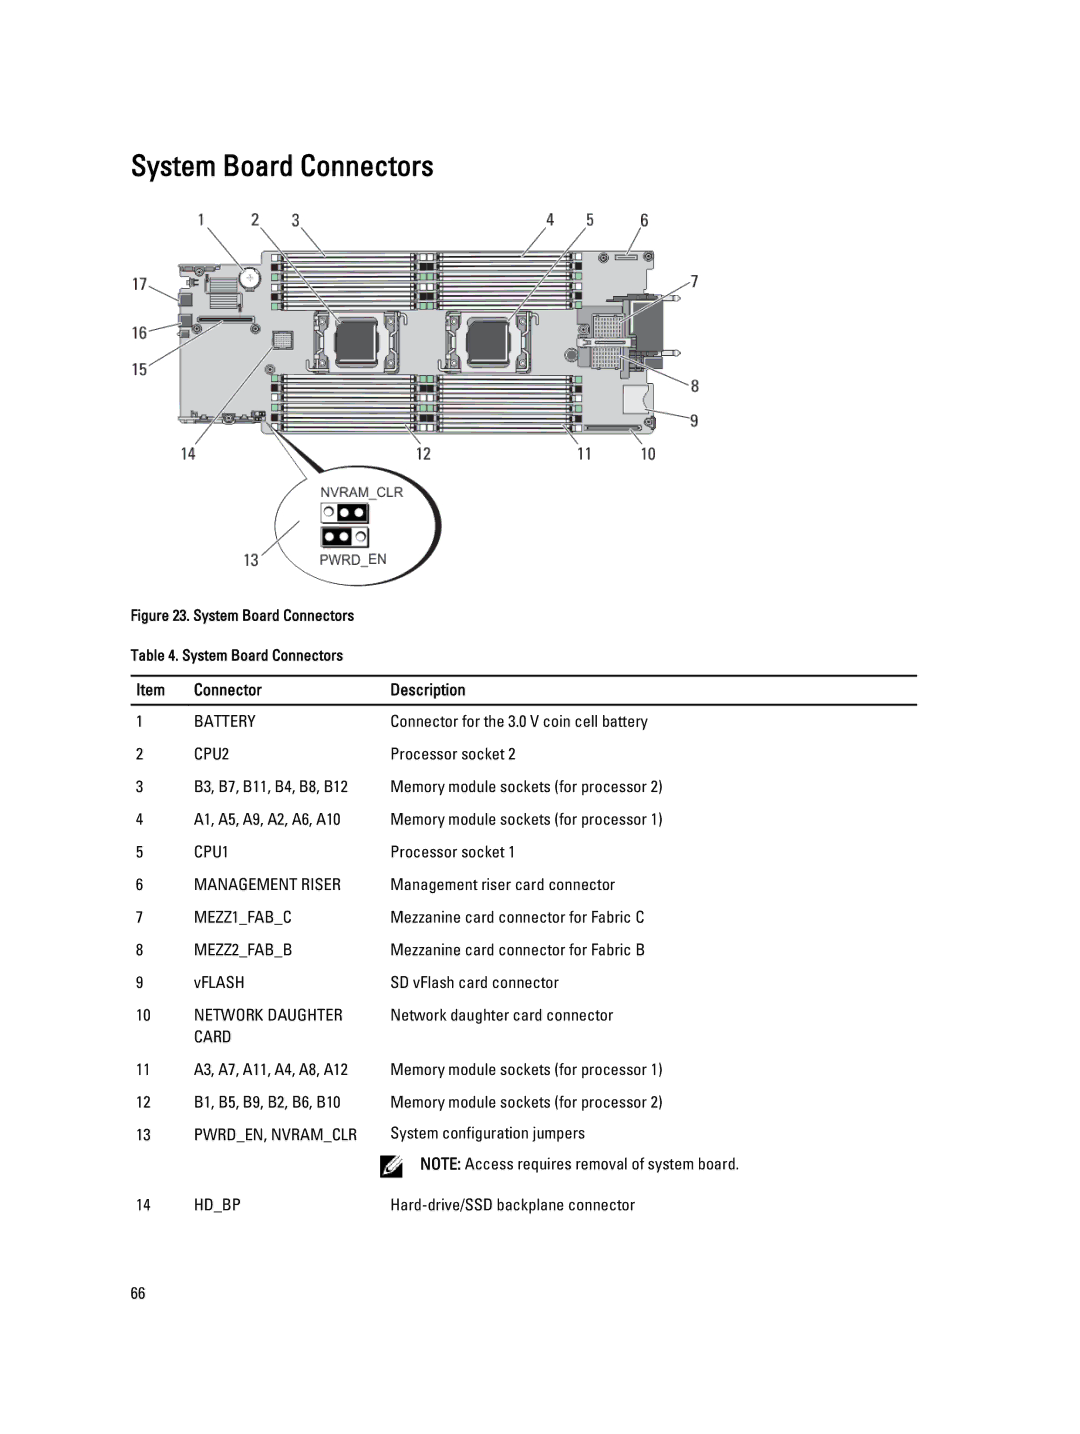 Dell M620 owner manual System Board Connectors, Connector Description 